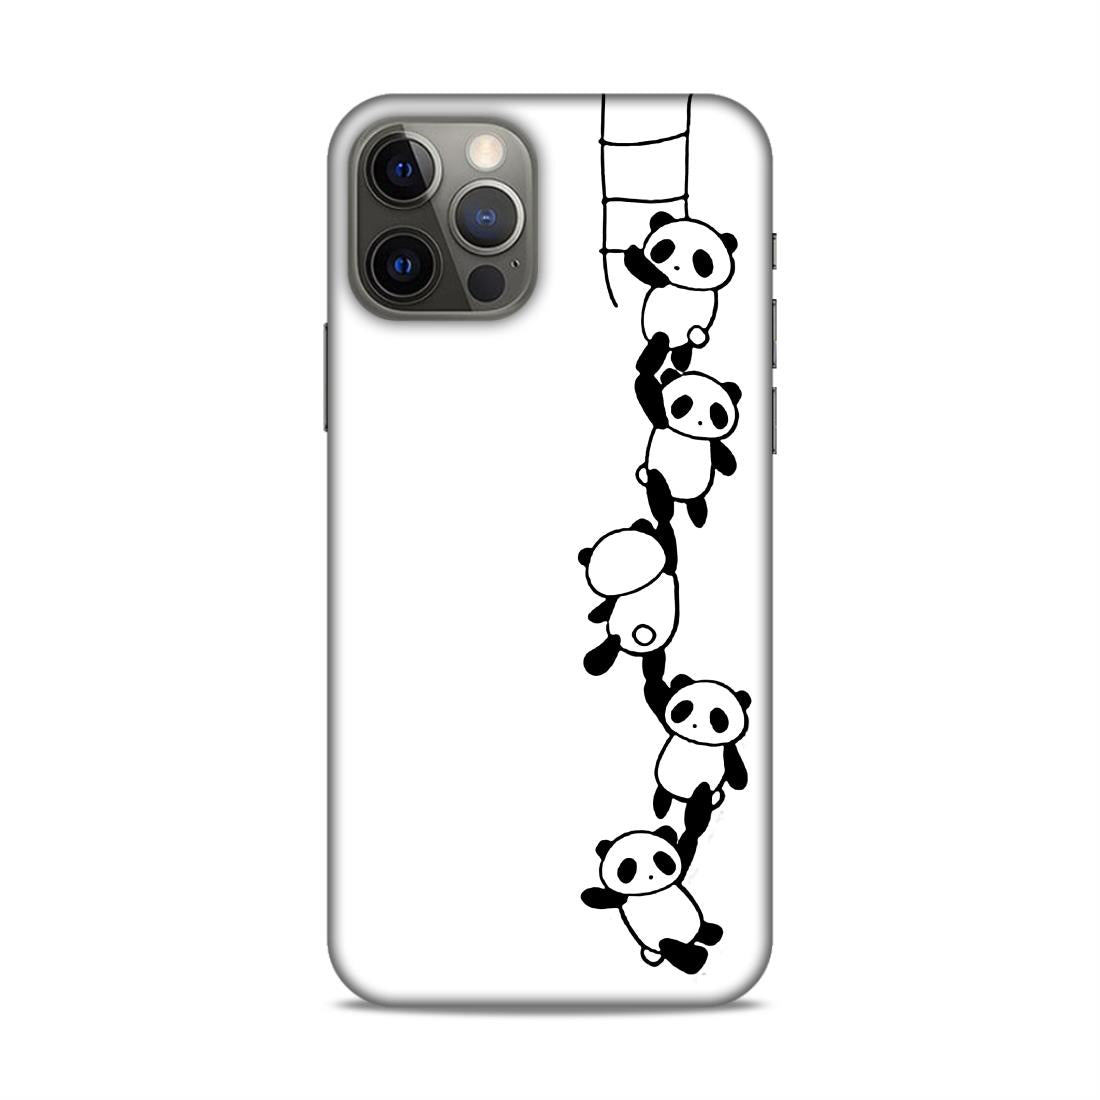 Panda Hard Back Case For Apple iPhone 12 / 12 Pro